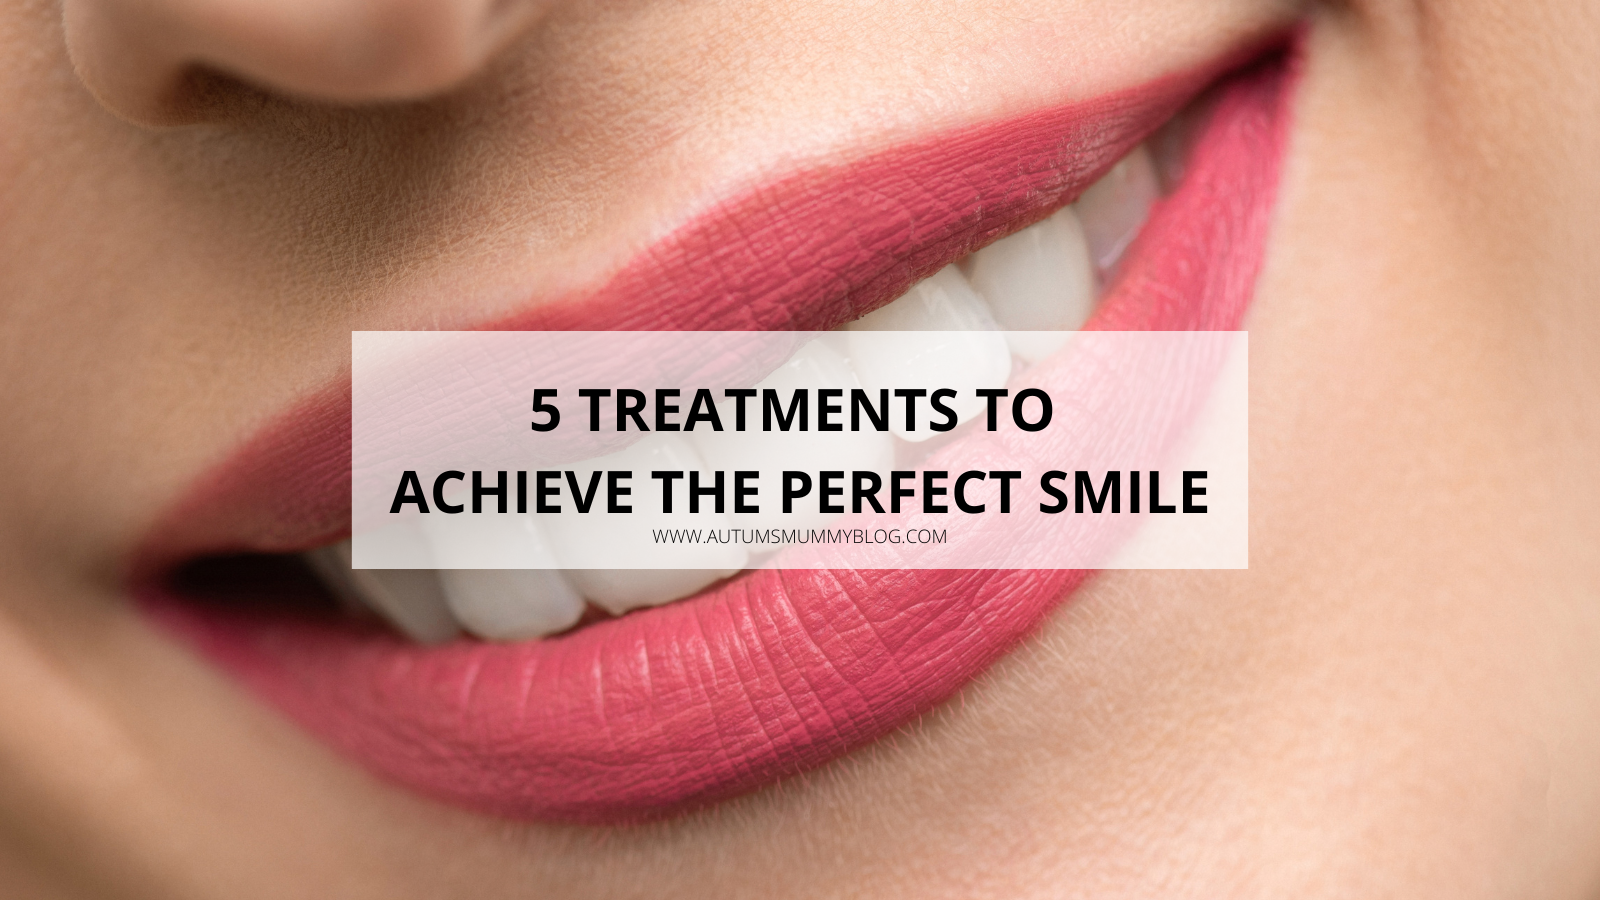 5 Treatments to Achieve the Perfect Smile - Autumn's Mummy